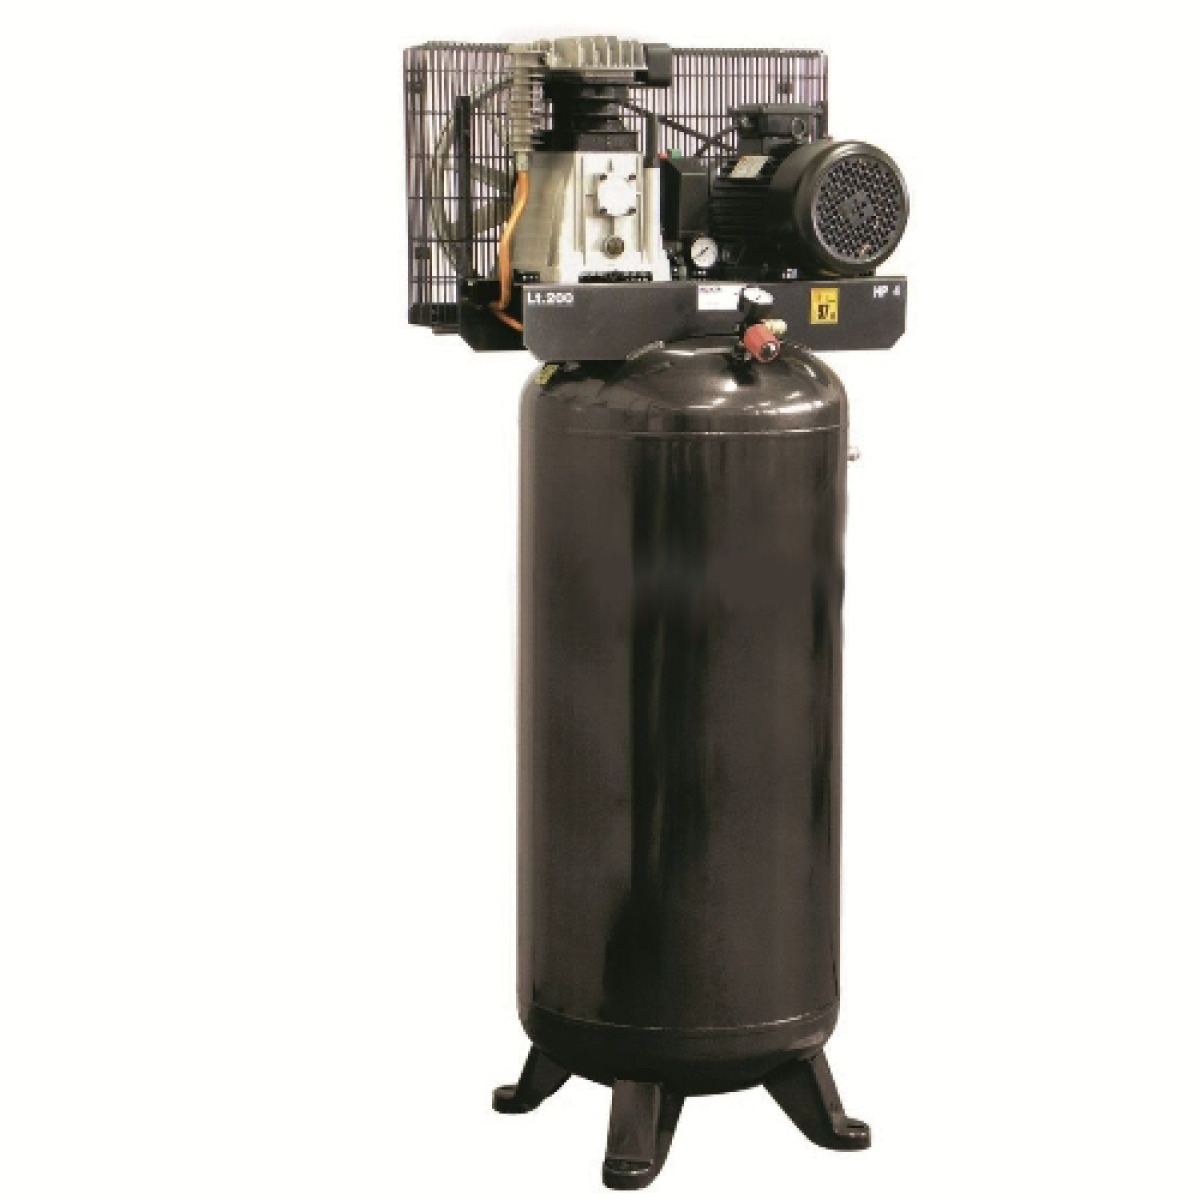 Druckluftkompressor 600-200 Liter - stehend -400 V / B-Ware